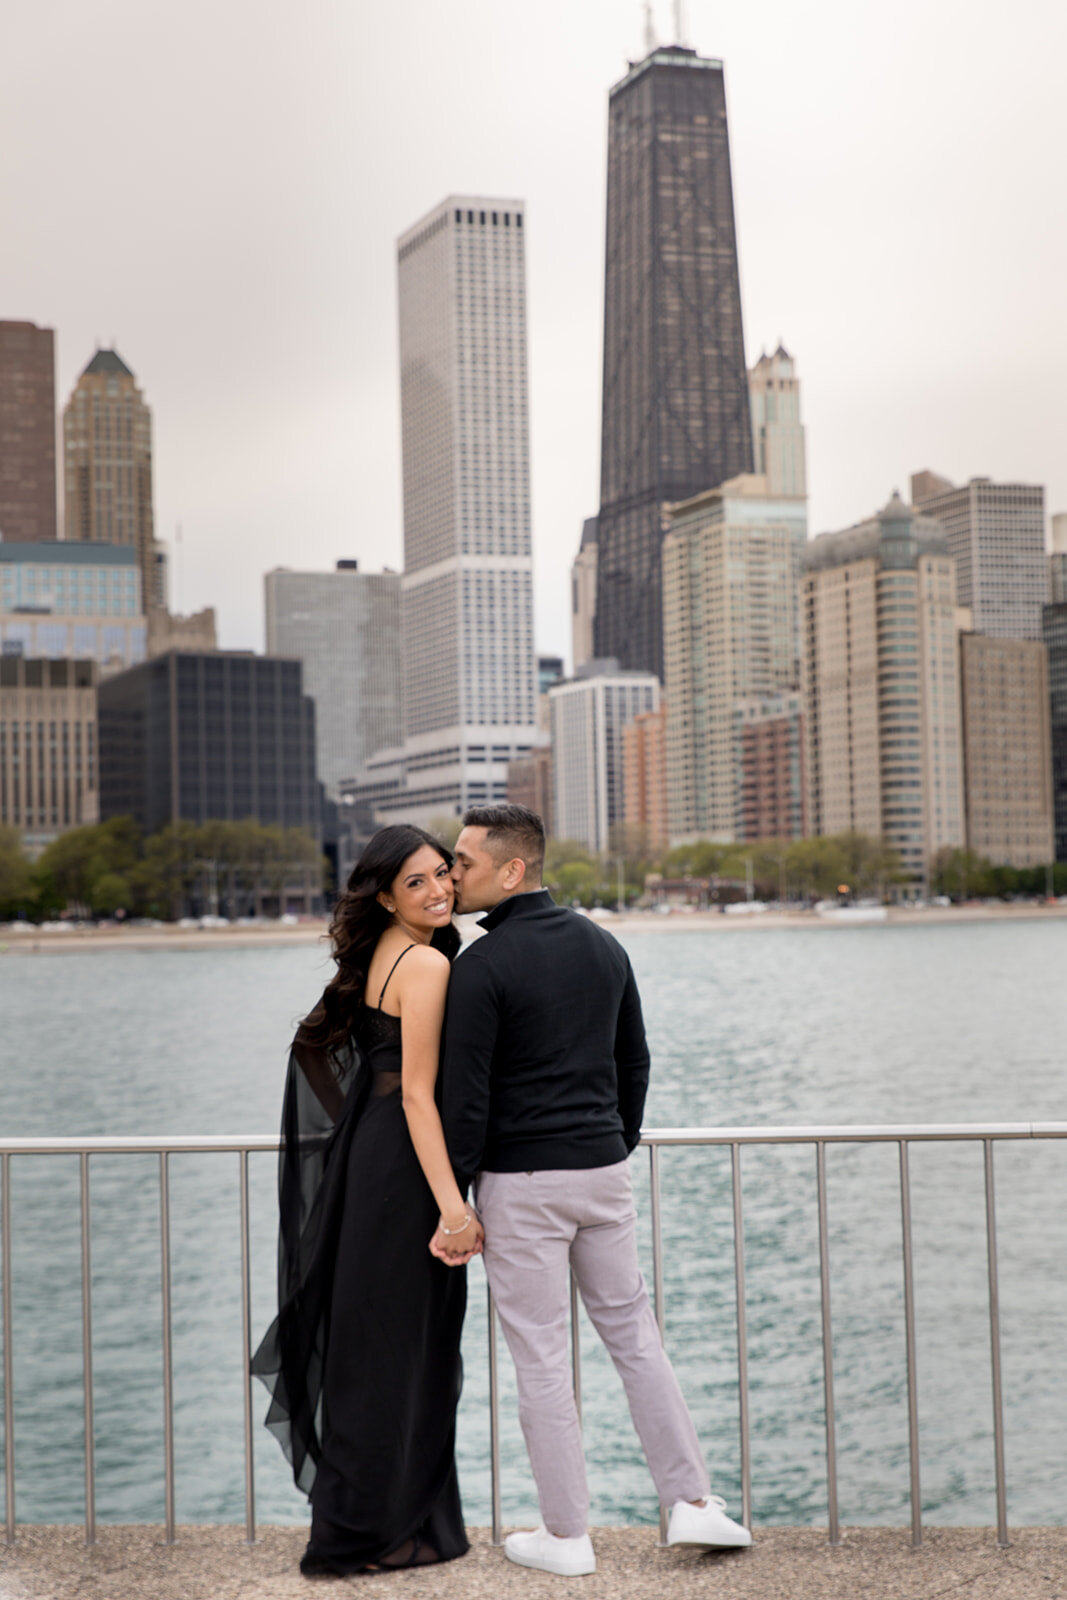 Le Cape Weddings - Chicago Engagement Session - Yatrik and Shivani -1_websize (1).jpg